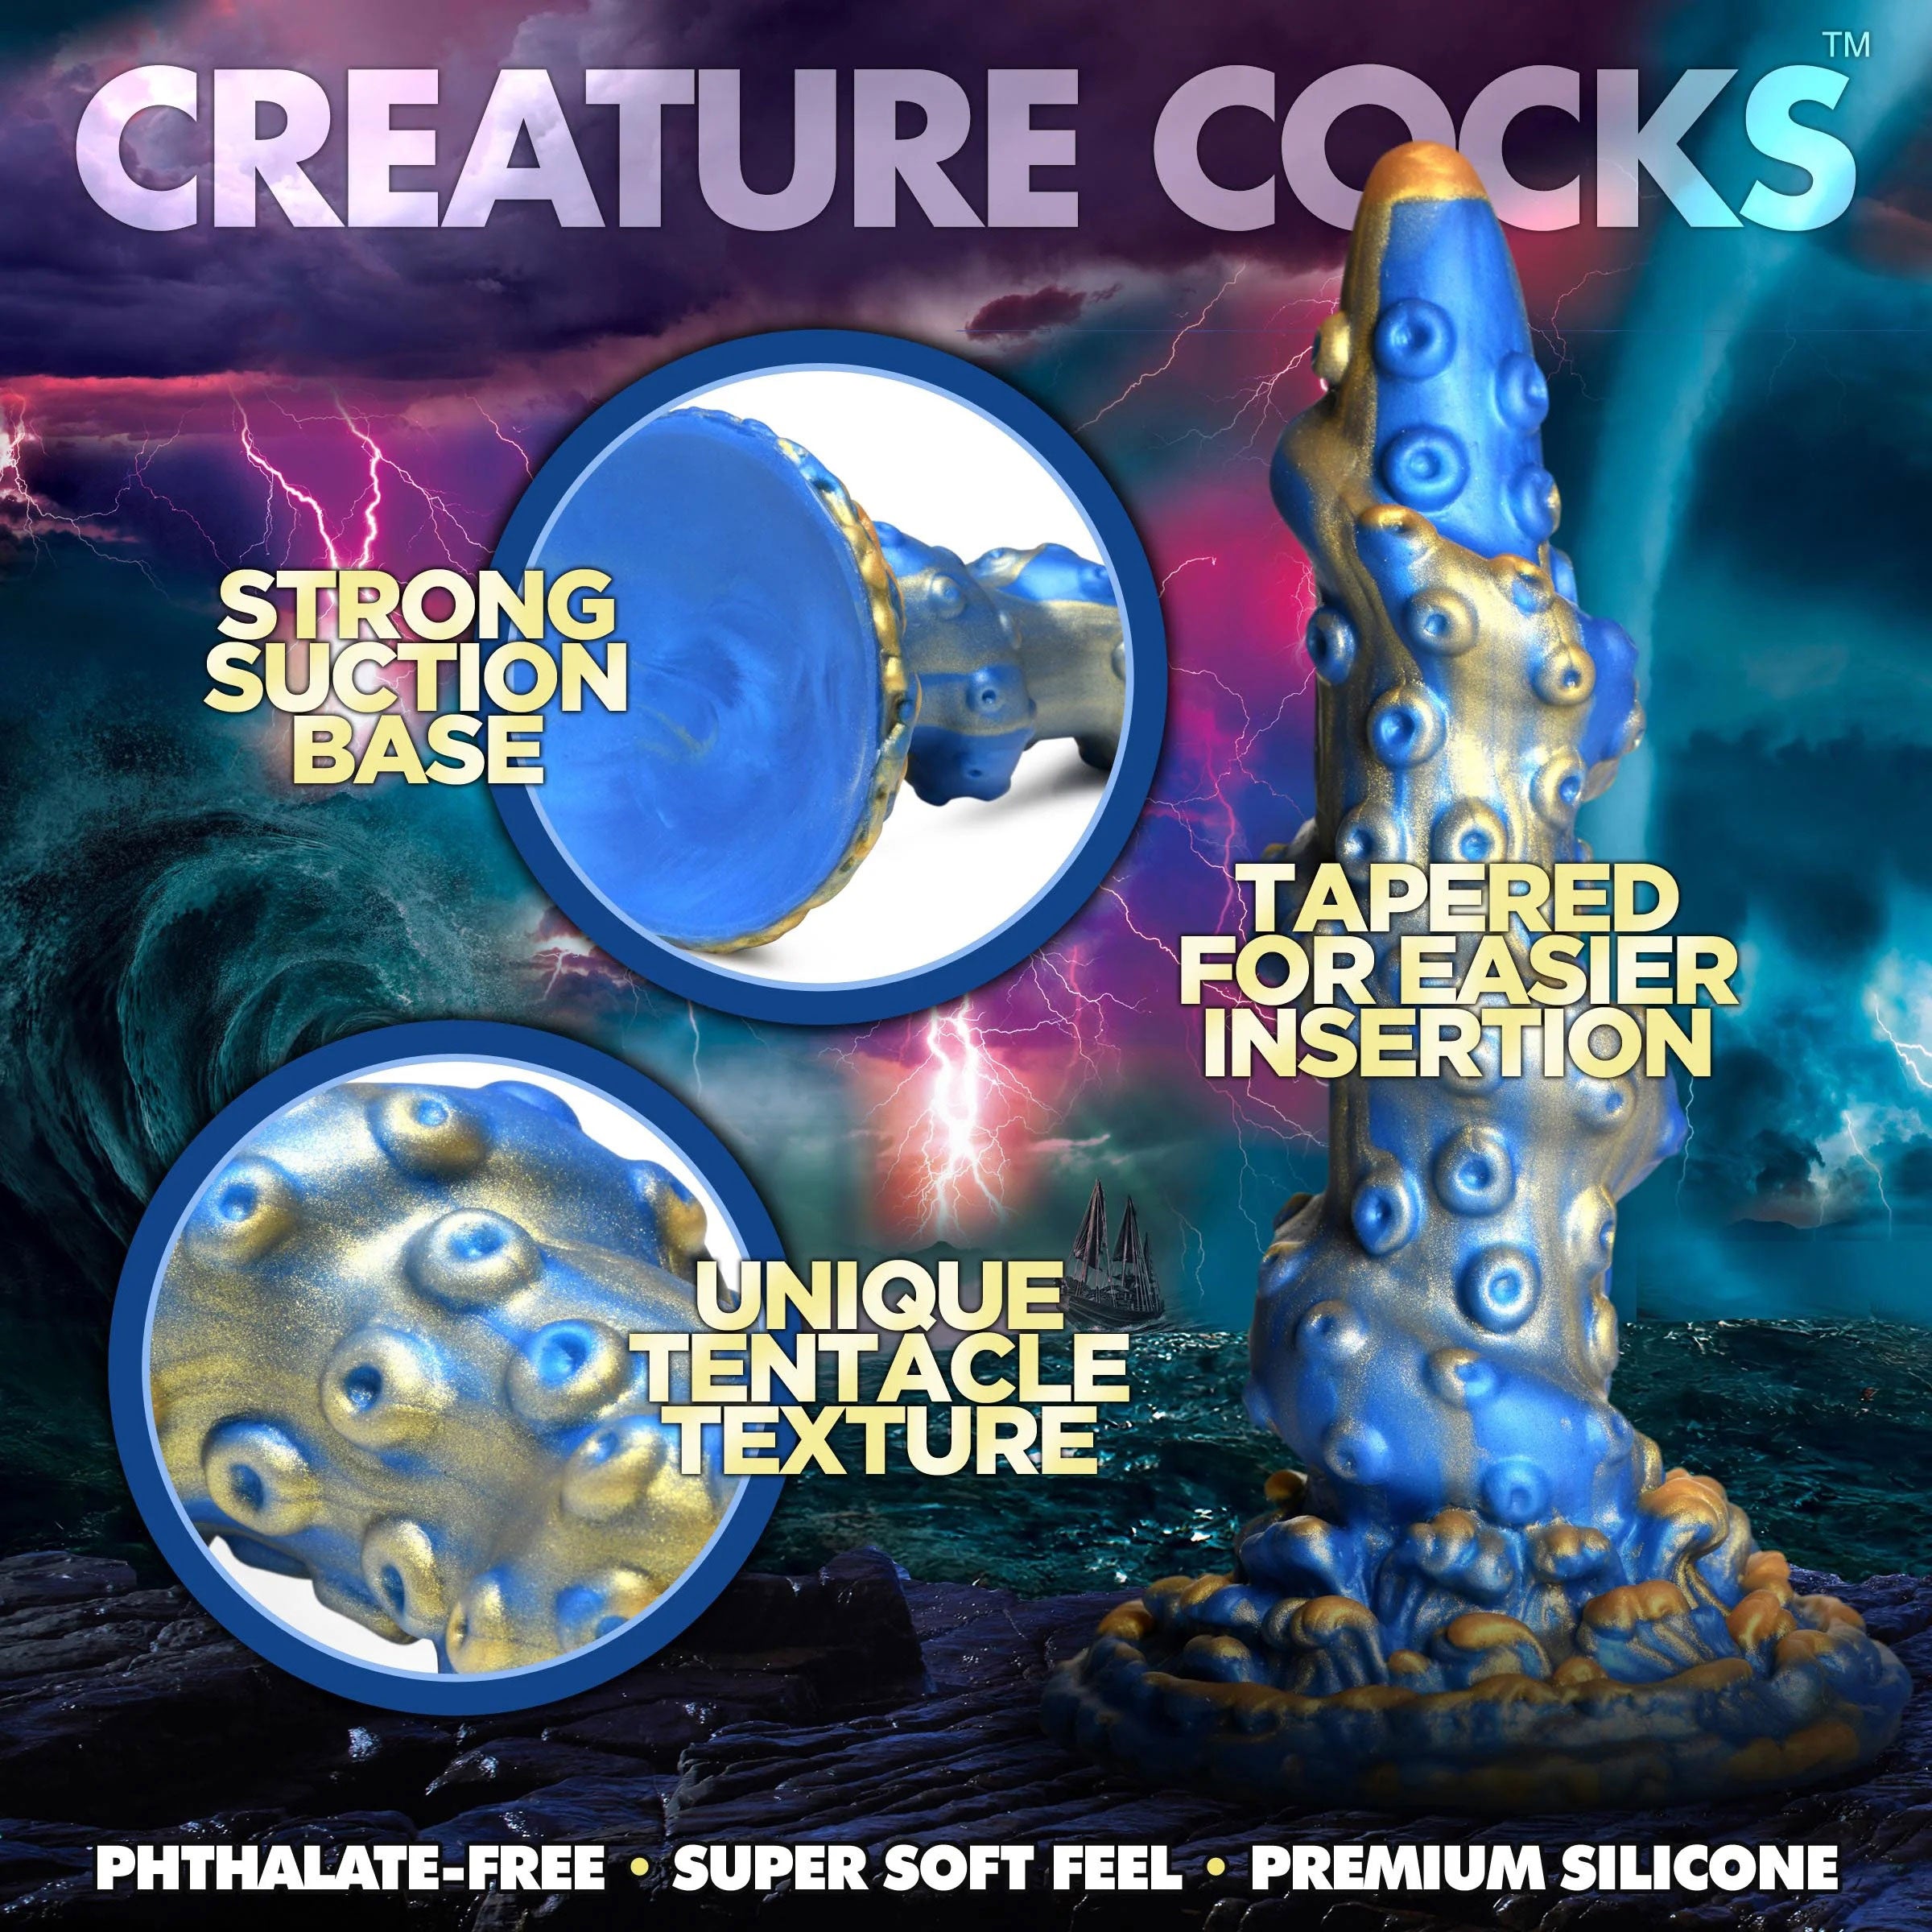 Dive into Deep-Sea Fantasy with the Kraken Silicone Dildo - A Unique & Safe Pleasure Toy!